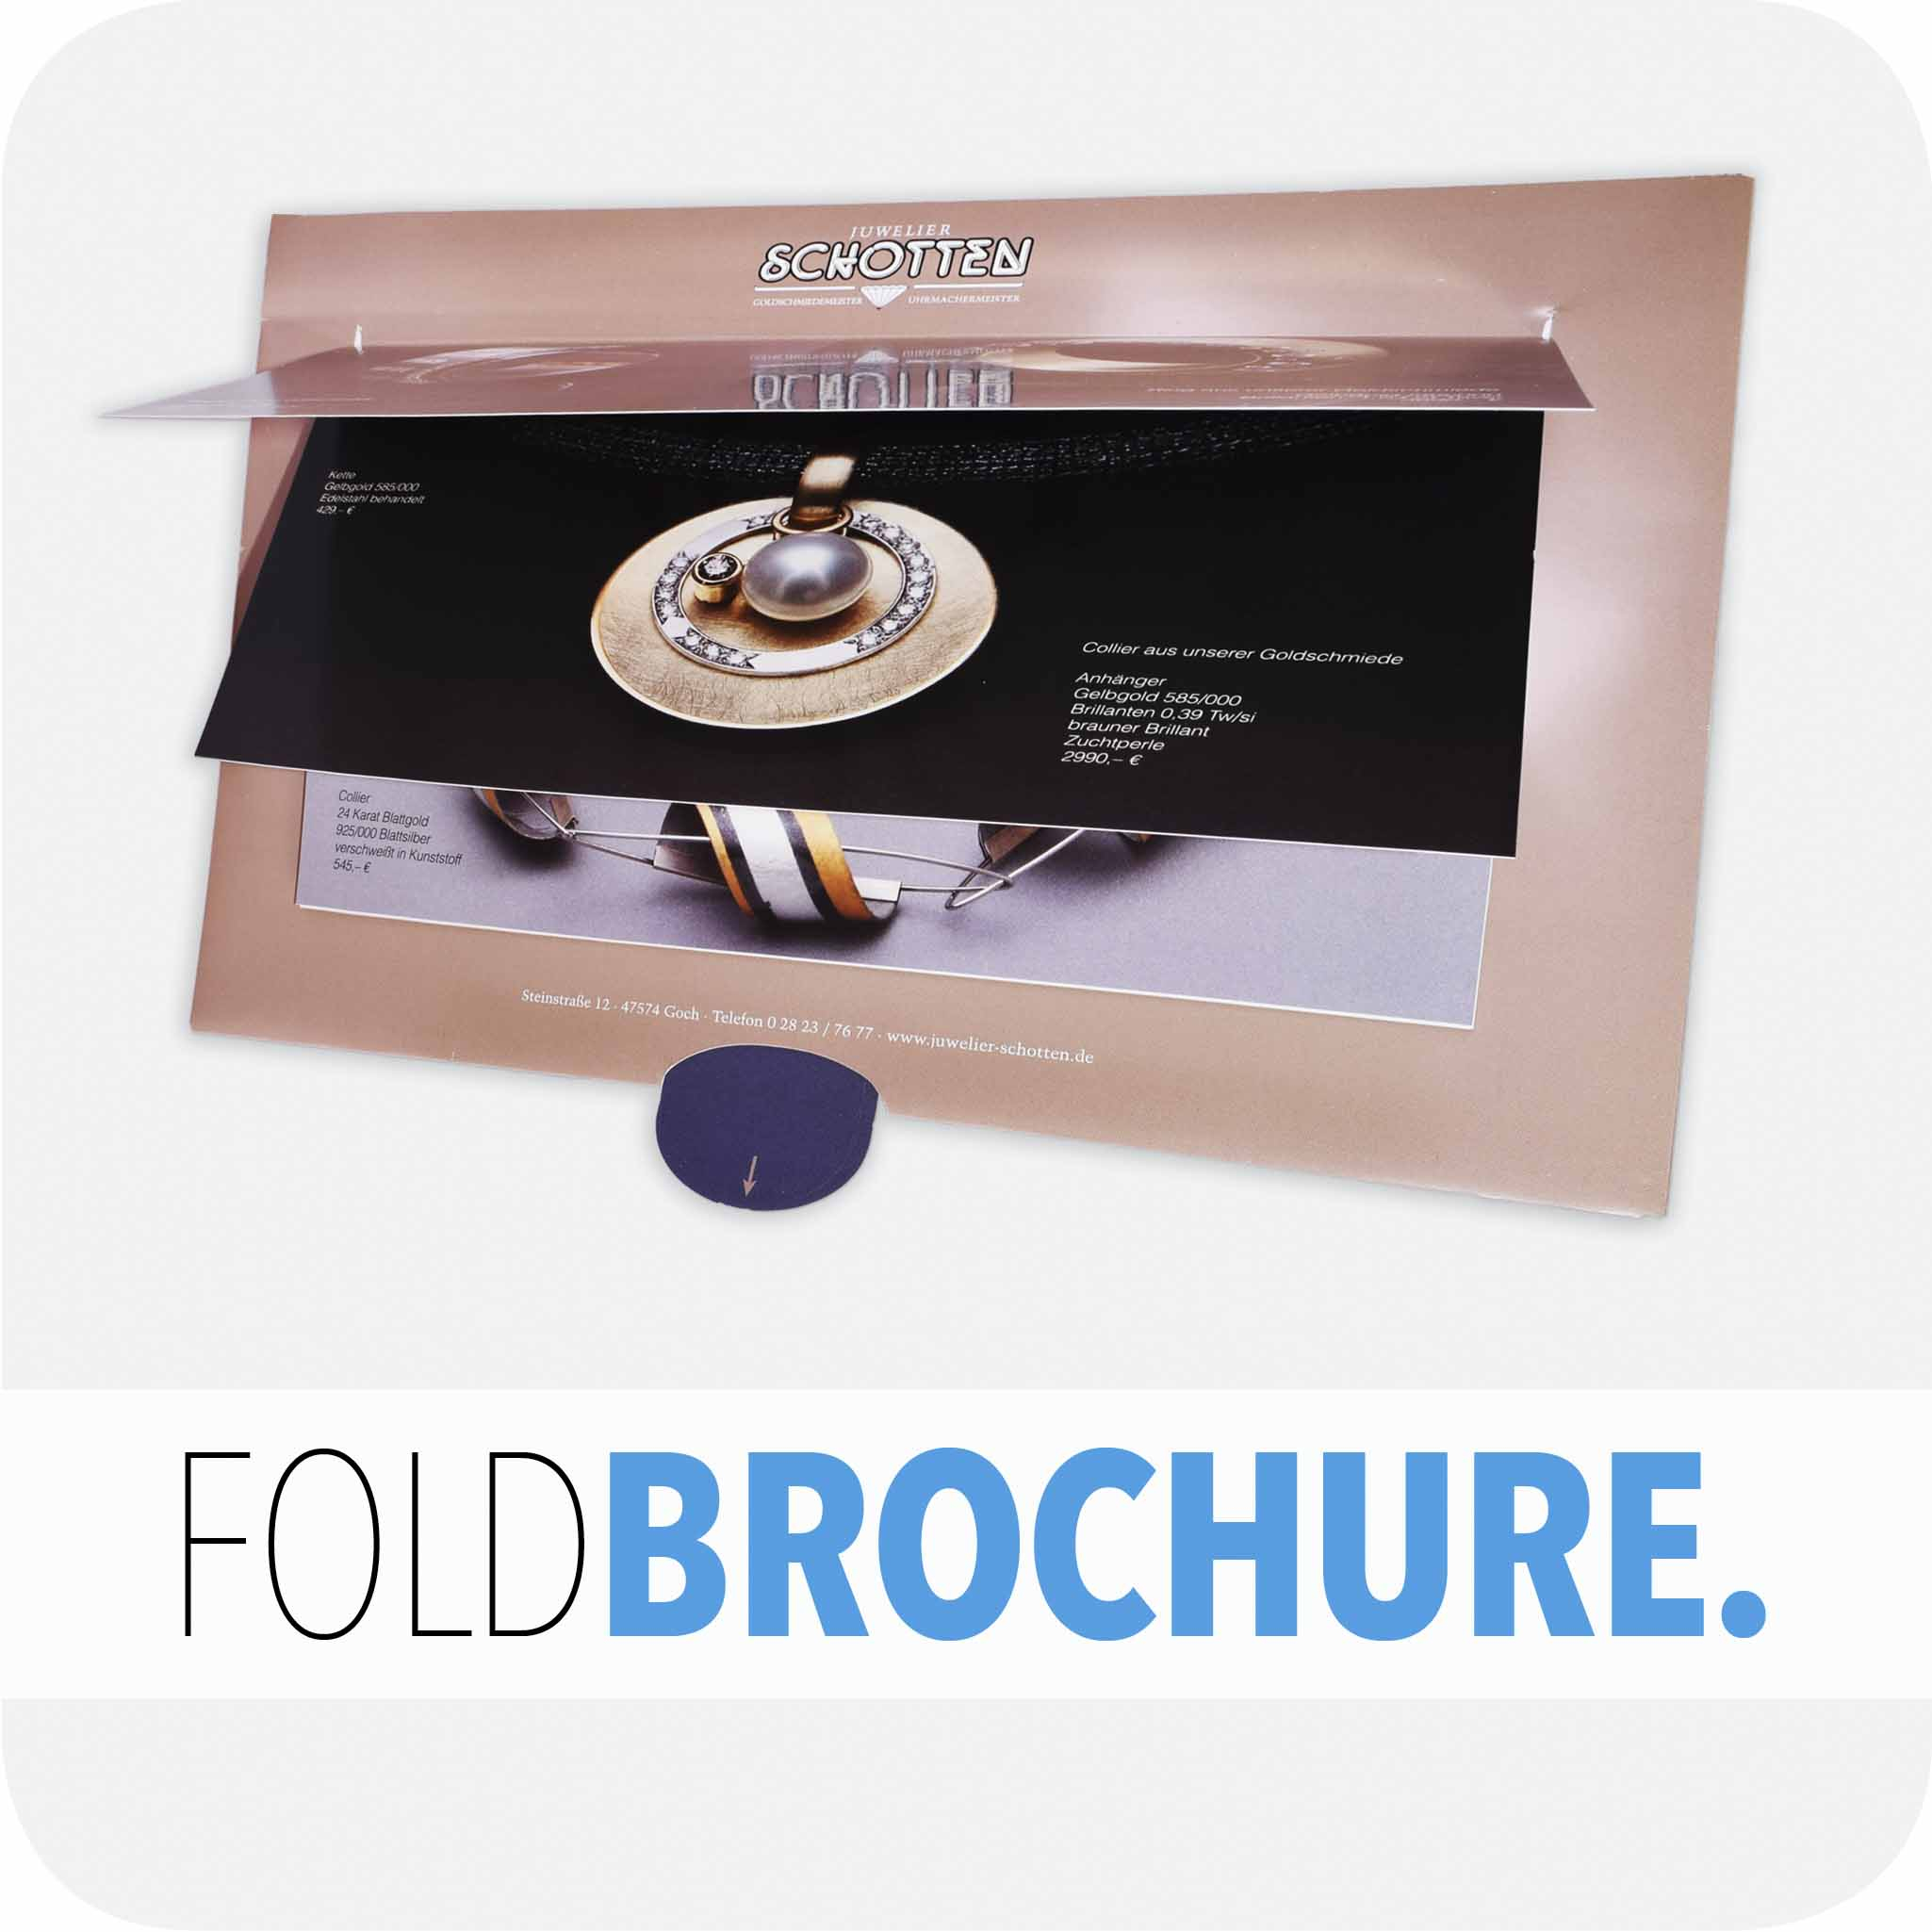 Fold brochure